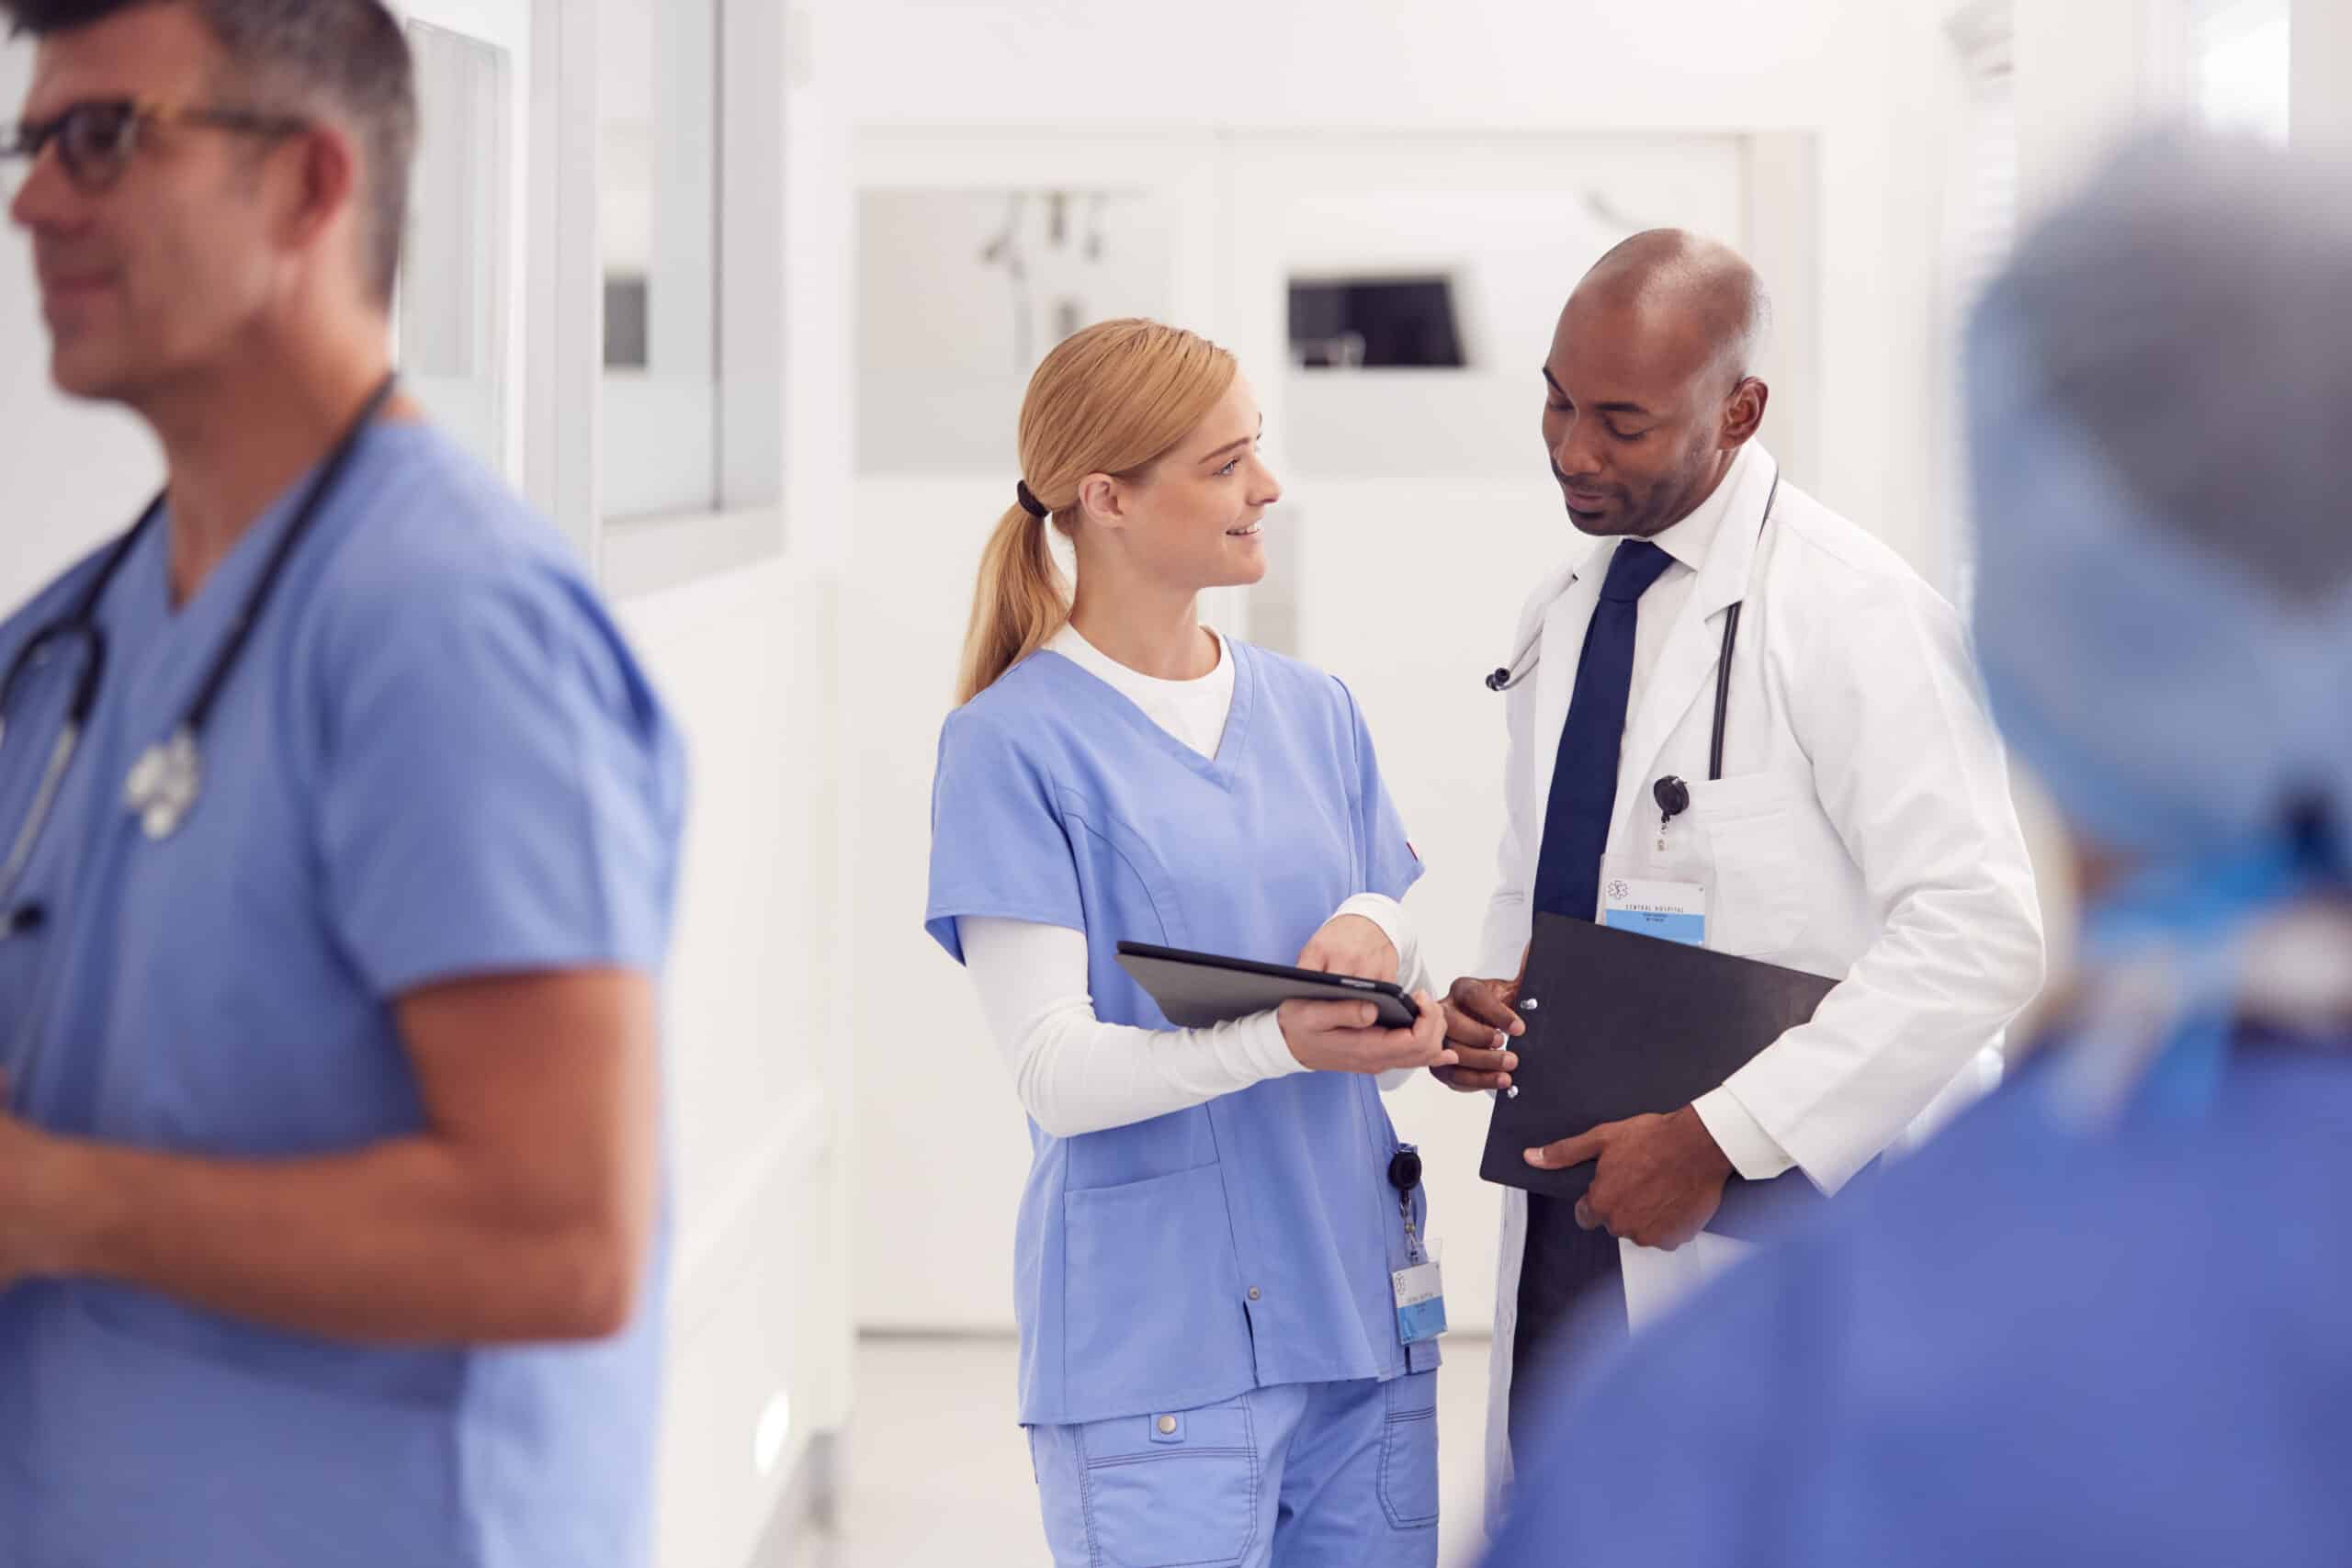 doctor in white coat and nurse in scrubs looking at digital tablet in hospital corridor